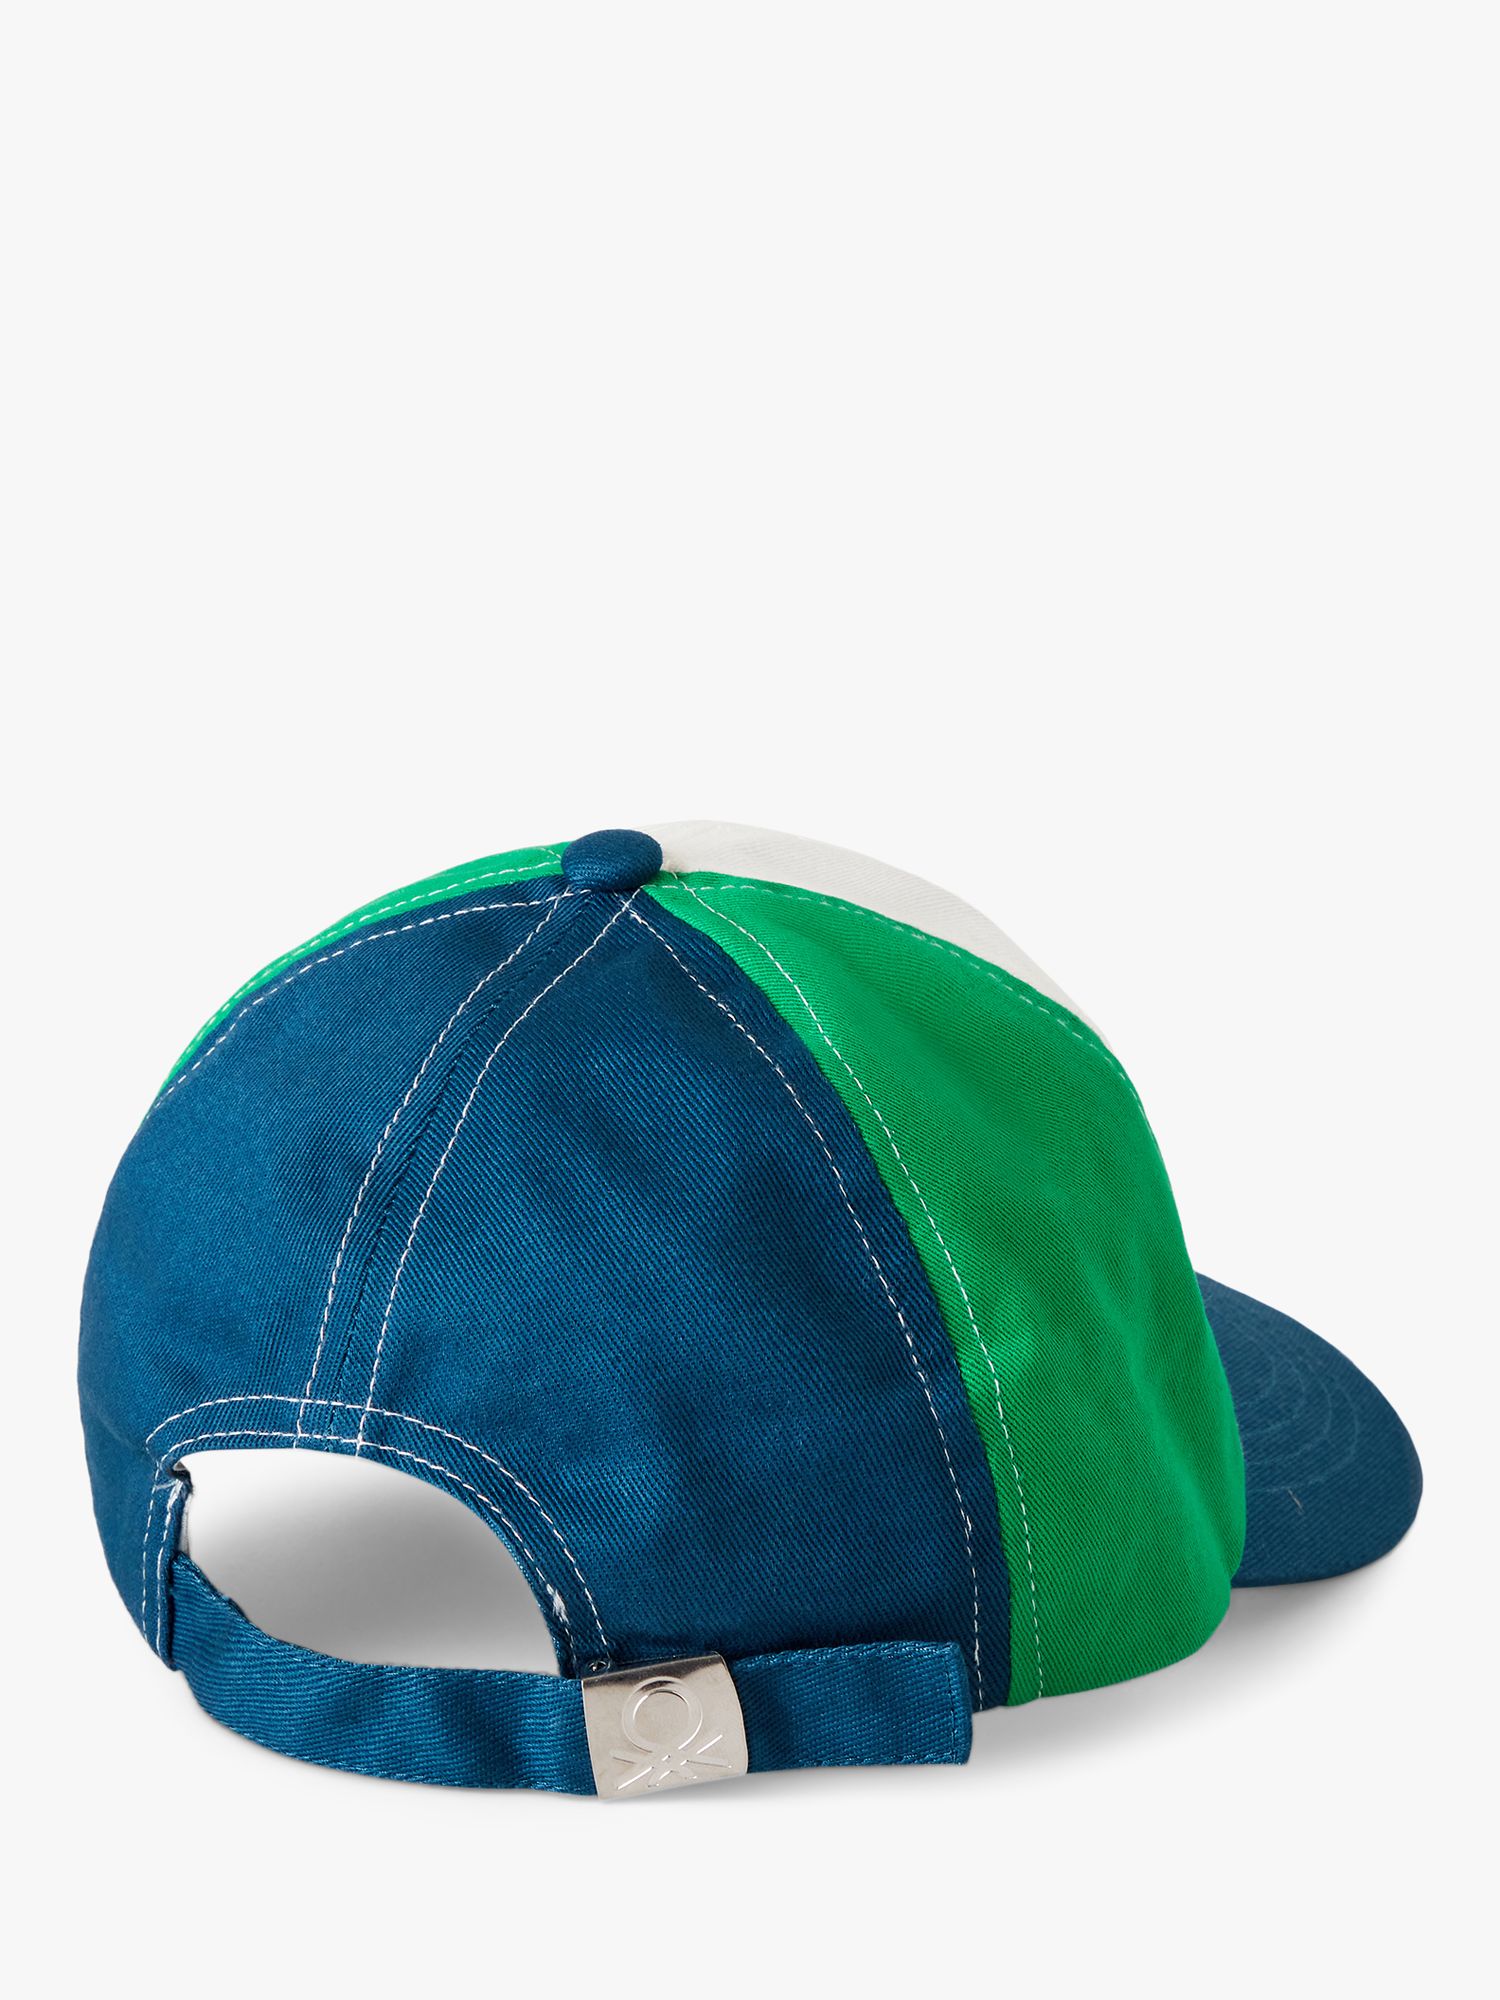 Buy Benetton Kids' Baseball Cap Online at johnlewis.com